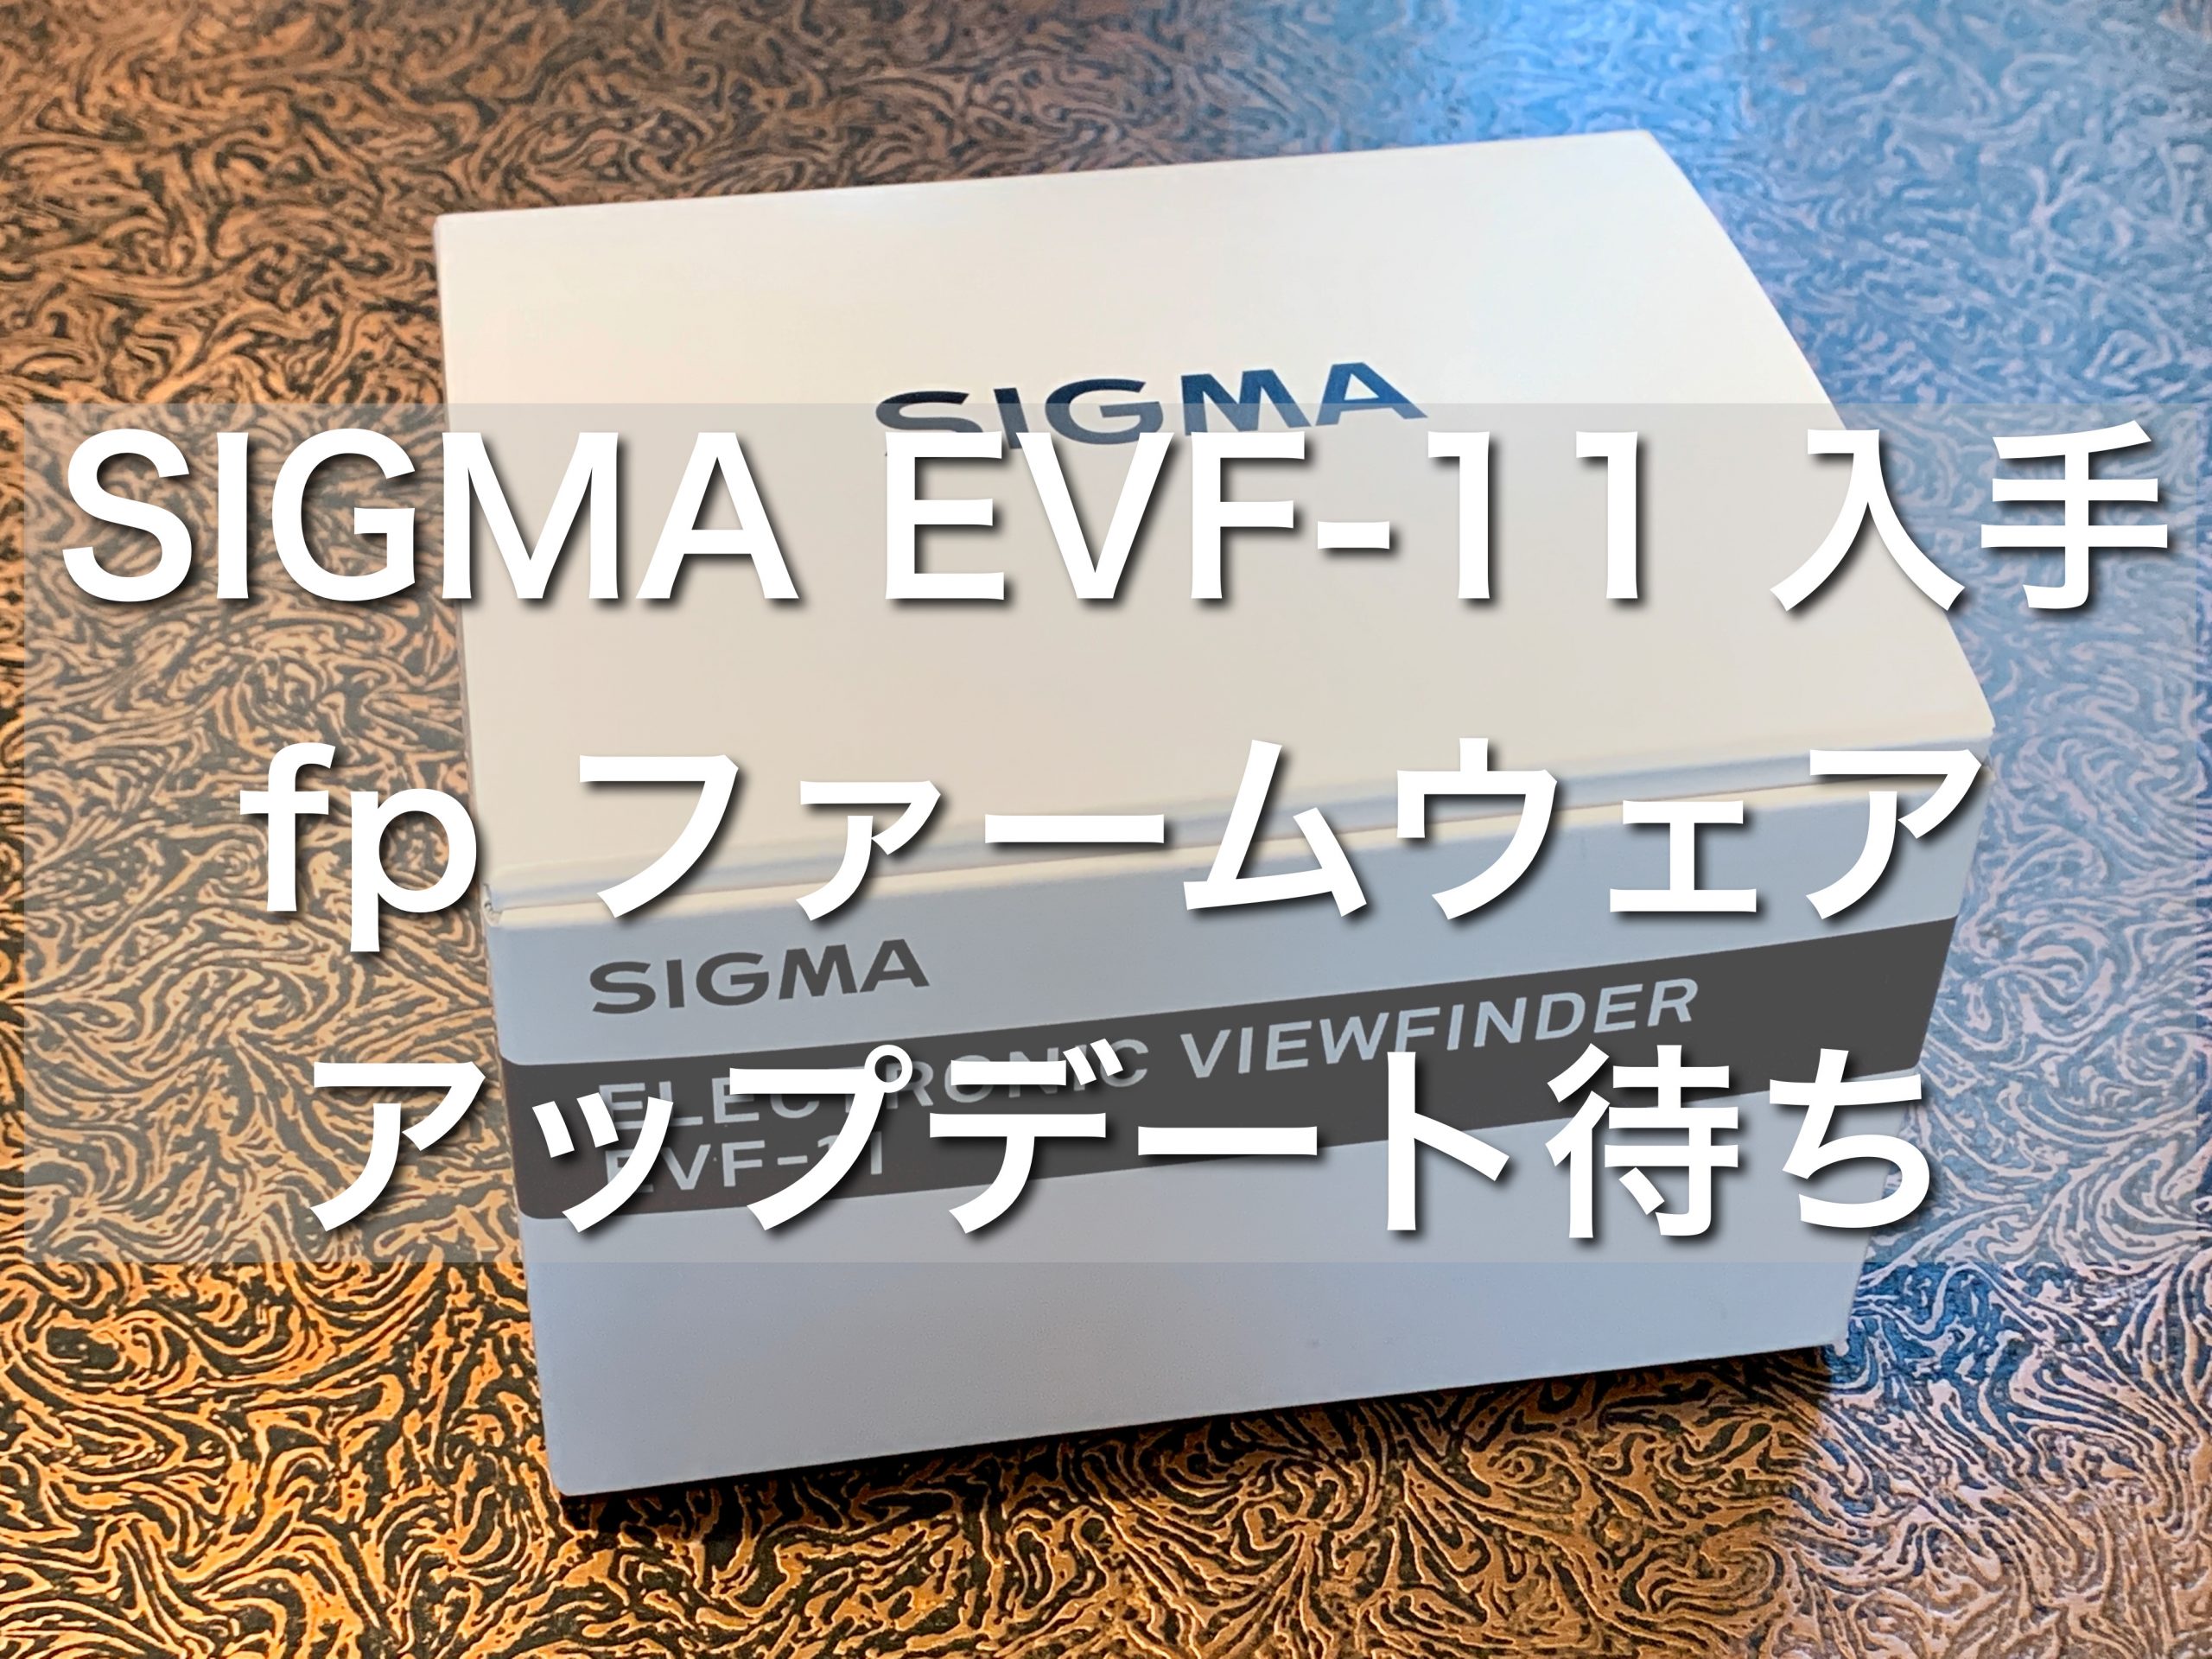 SIGMA ELECTRONIC VIEWFINDER EVF-11 を入手した まだ fp では使えないけど | | HOKARI's